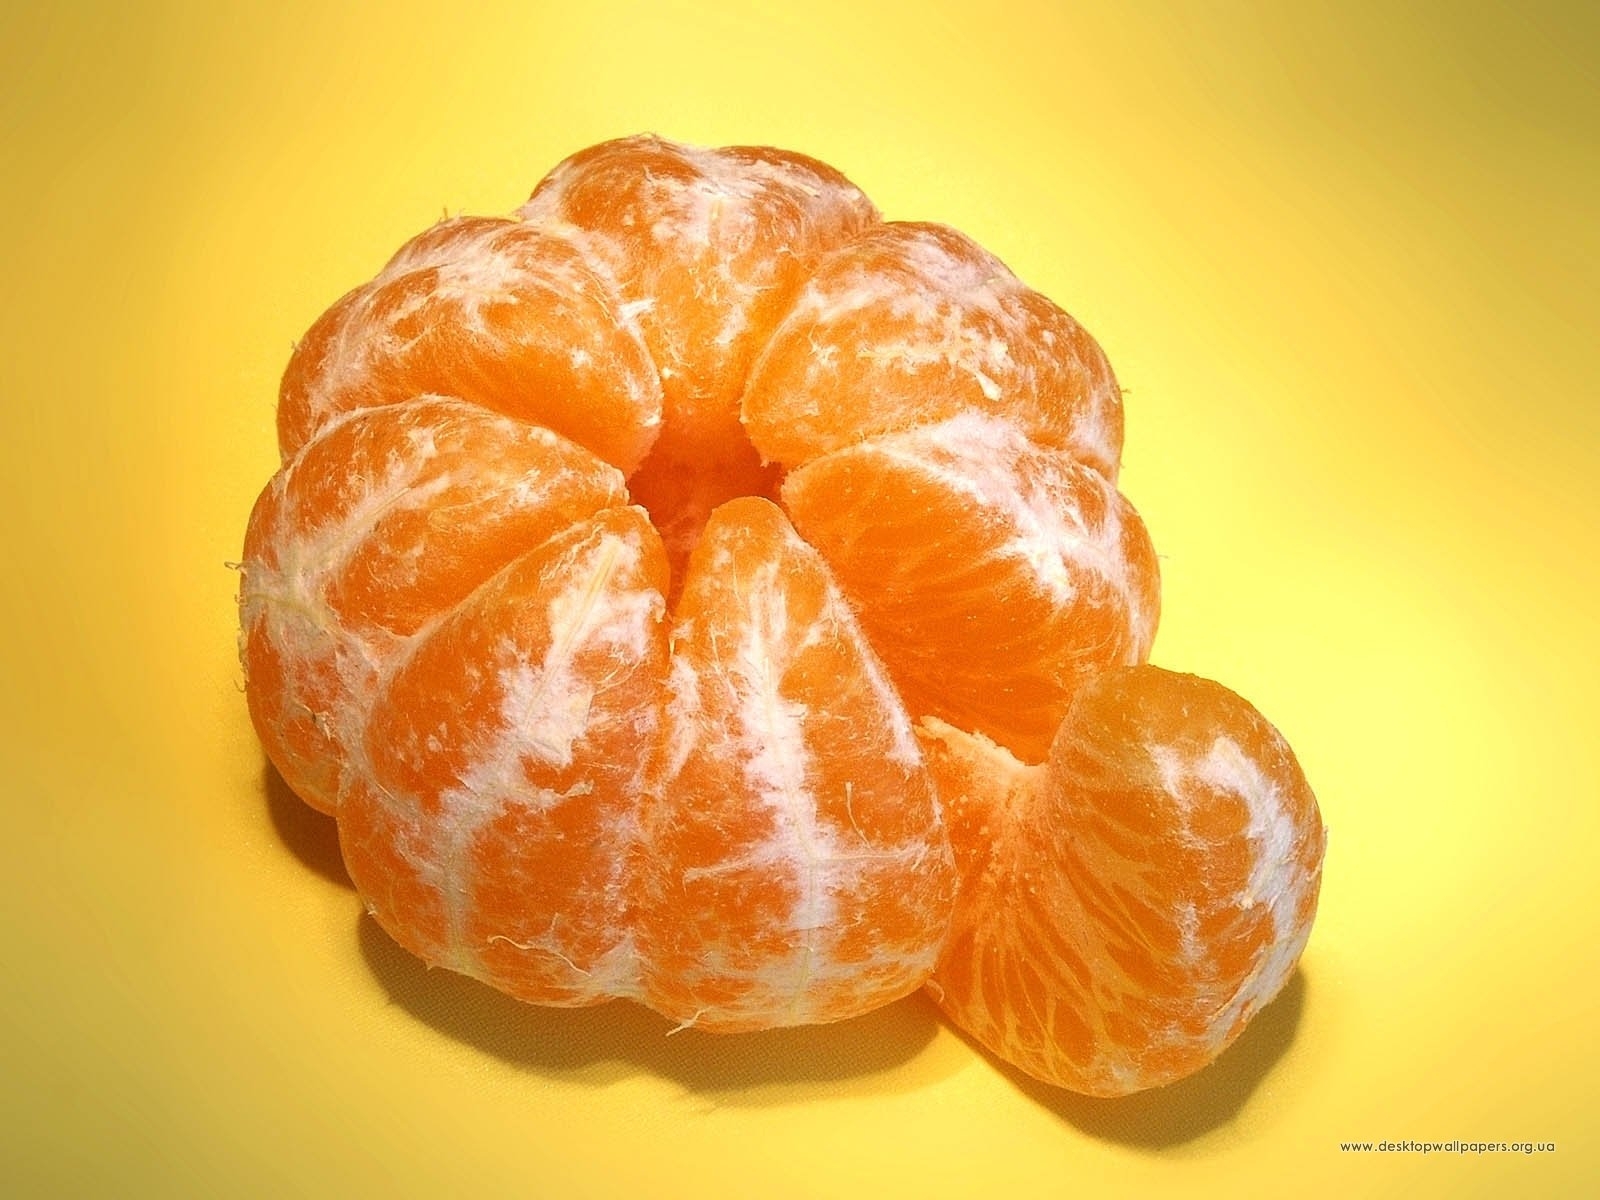 fruits, food, tangerines, orange 32K